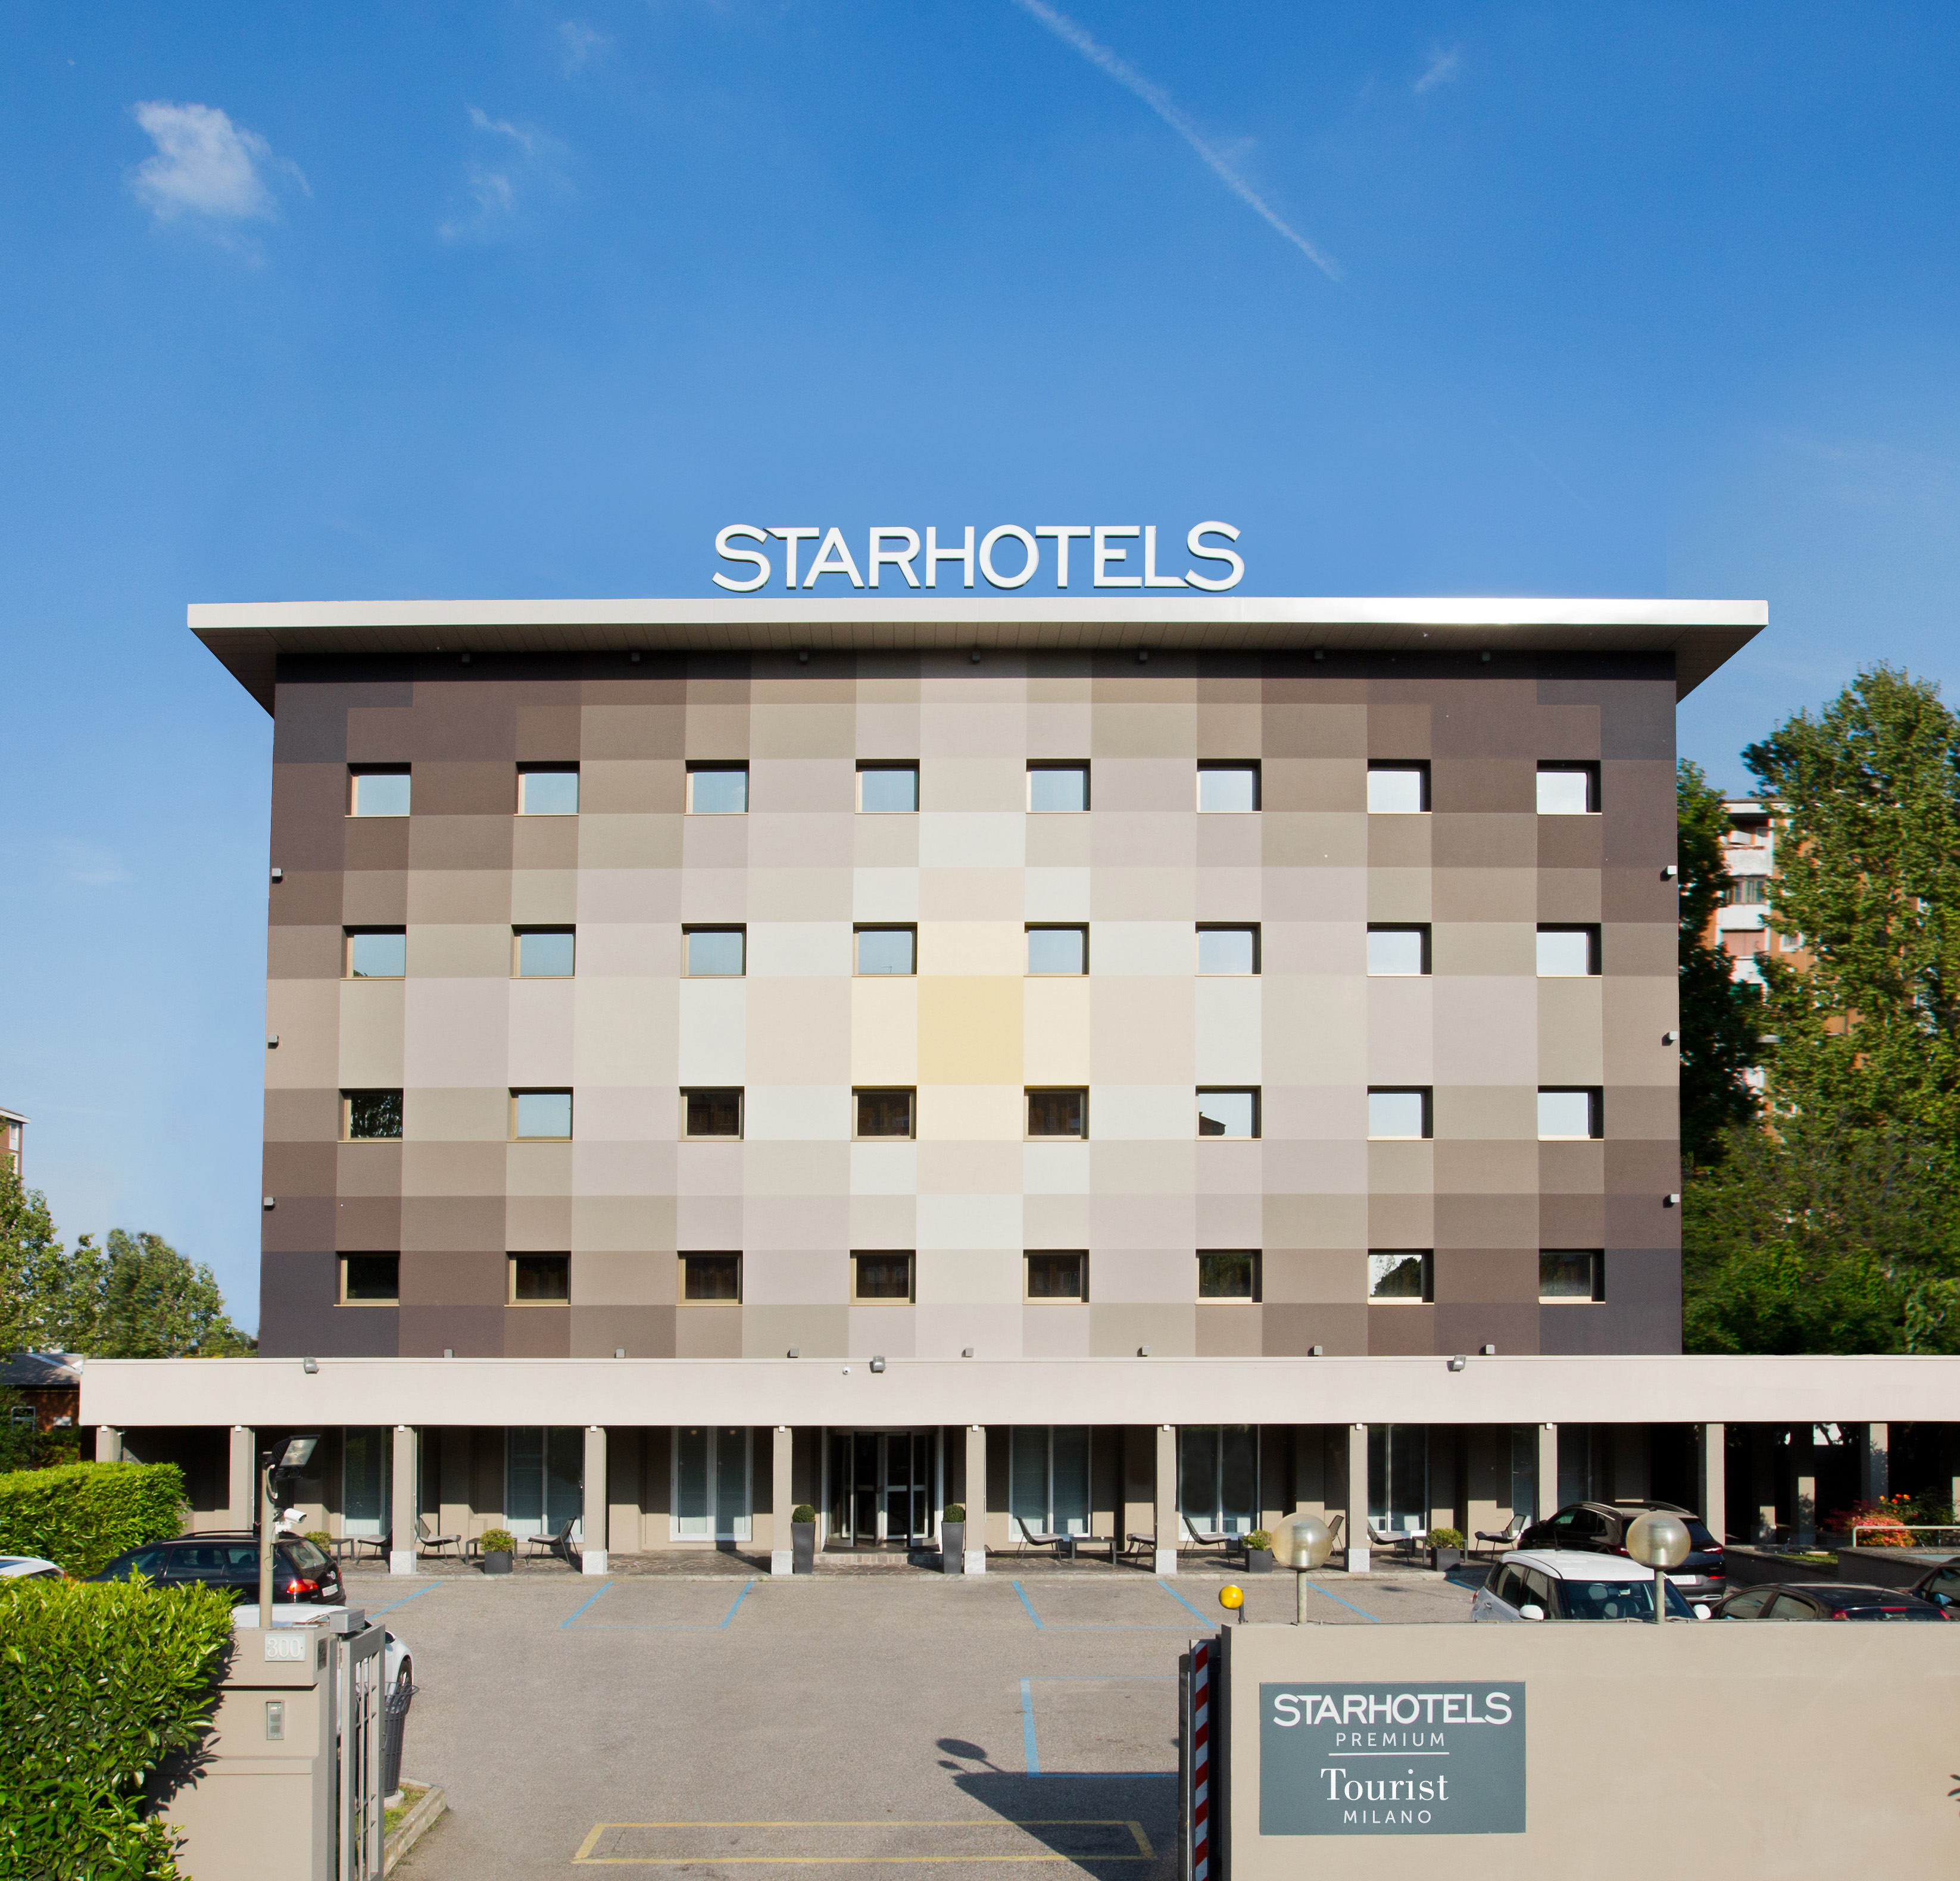 Starhotels Tourist image